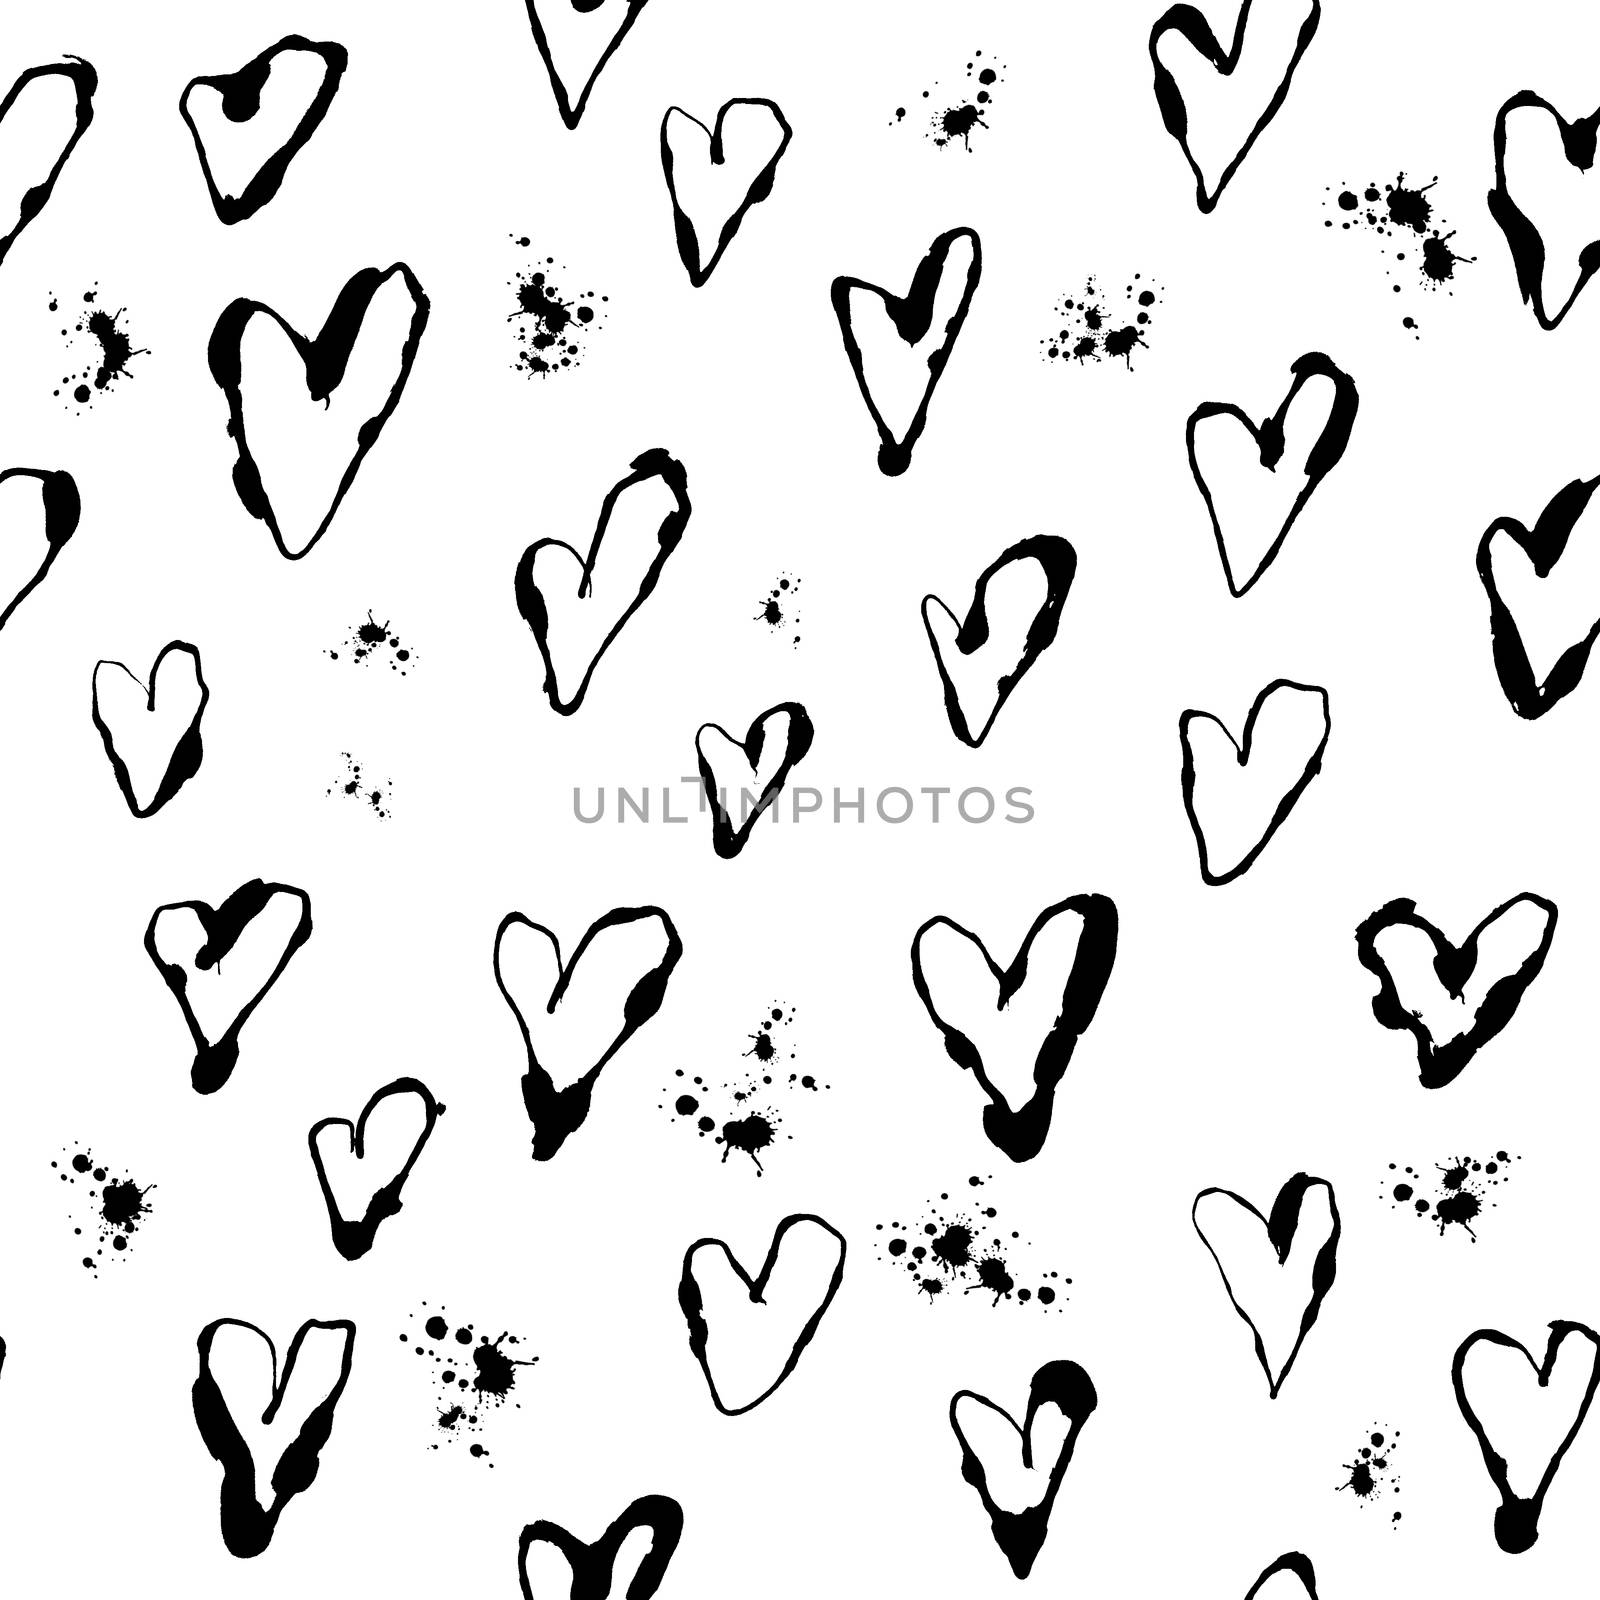 Ink texture hearts seamless pattern. Black design on white background. Love symbol, beautiful, romantic design. Hand drawn endless pattern illustration.